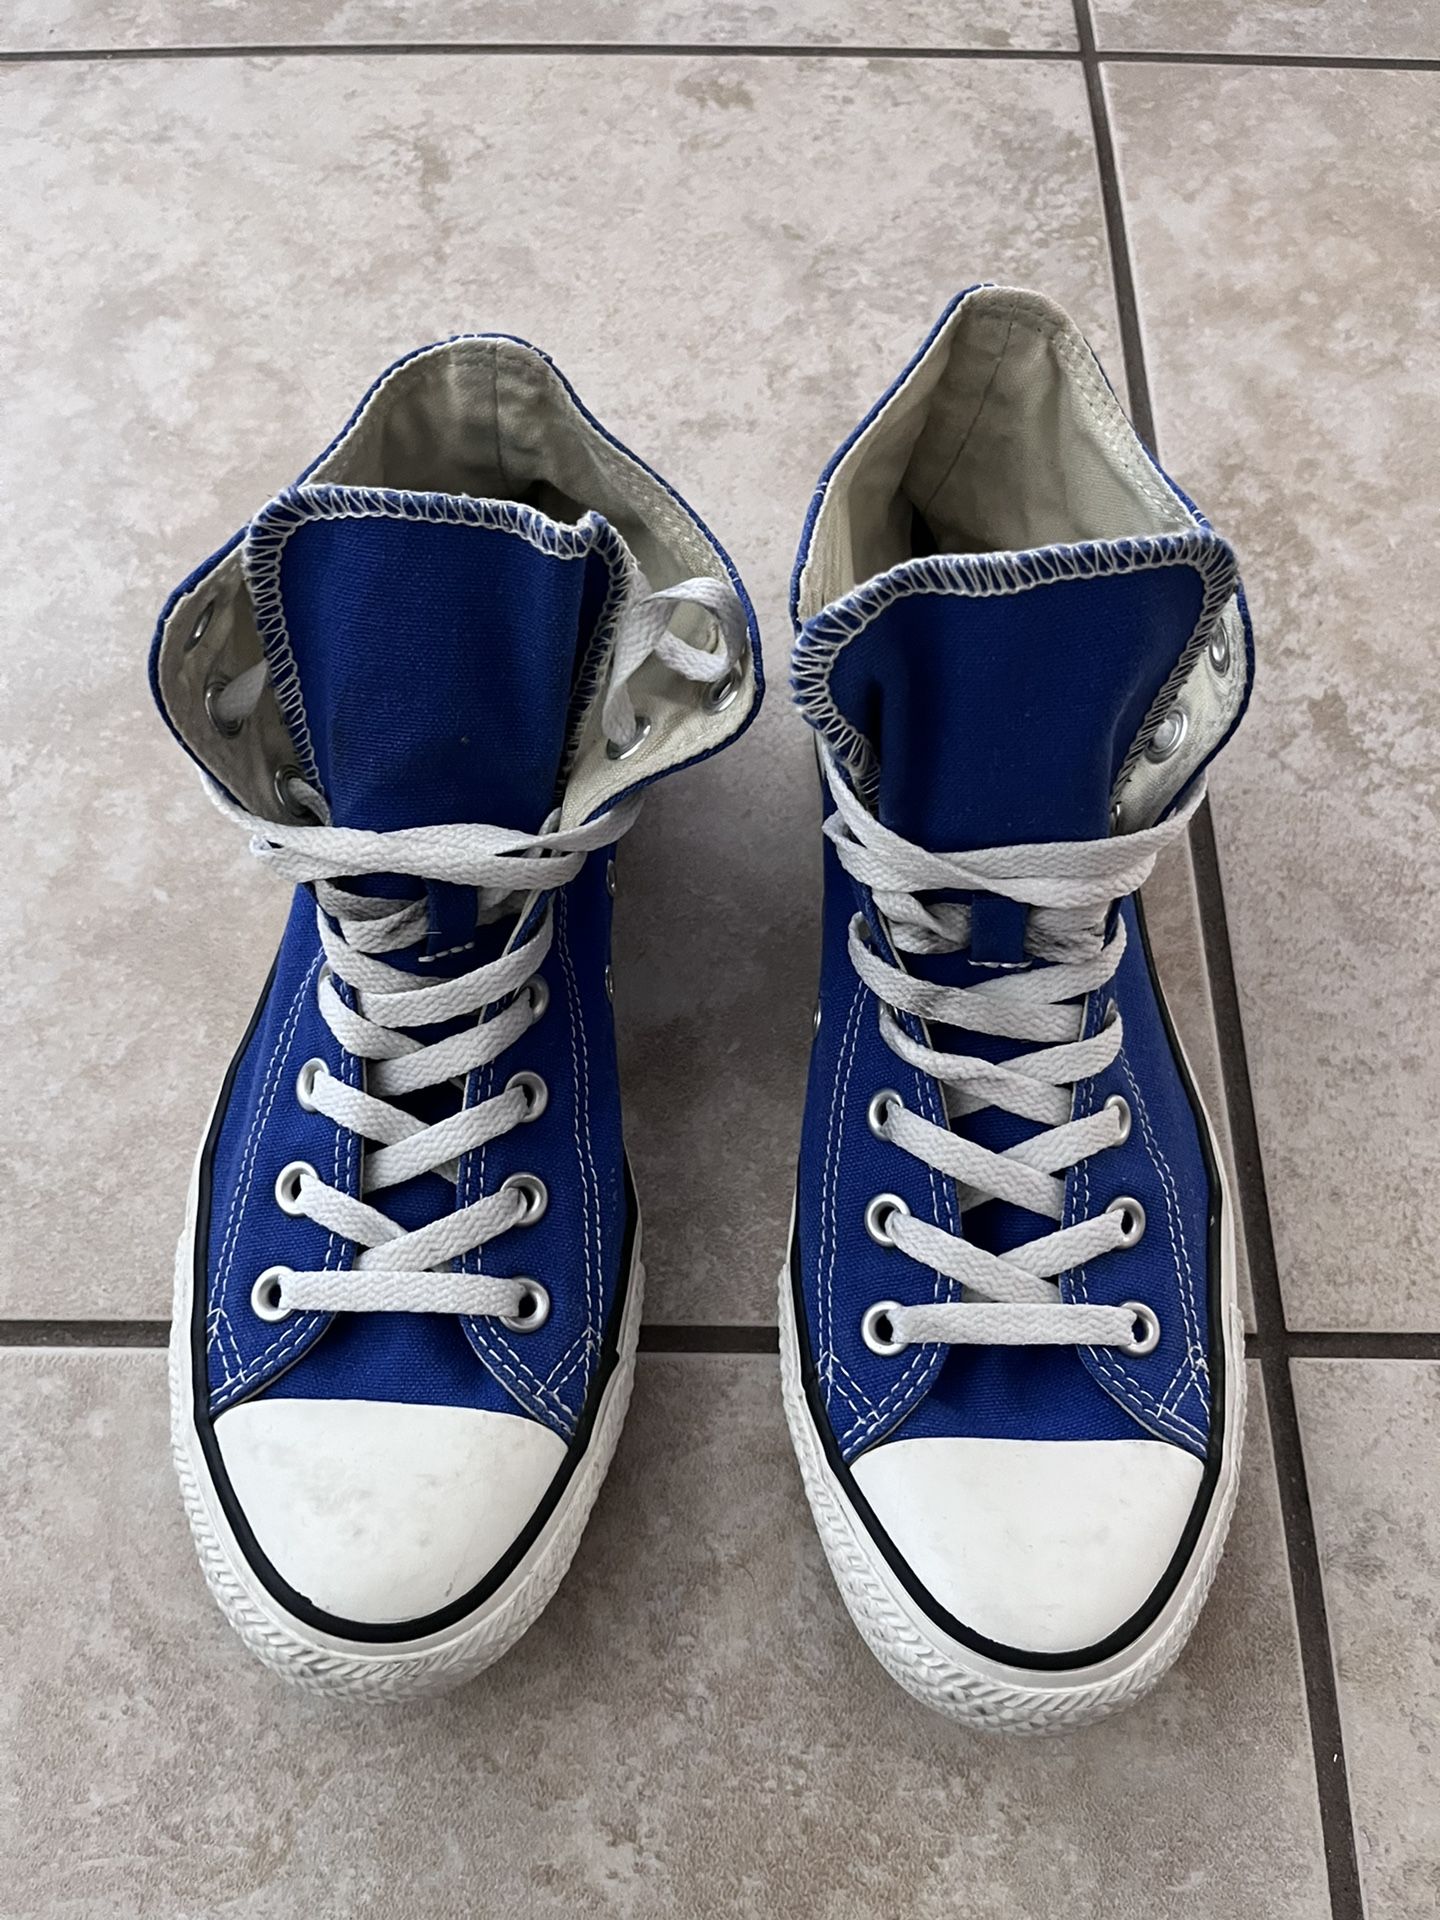 Blue High Top Converse Shoes